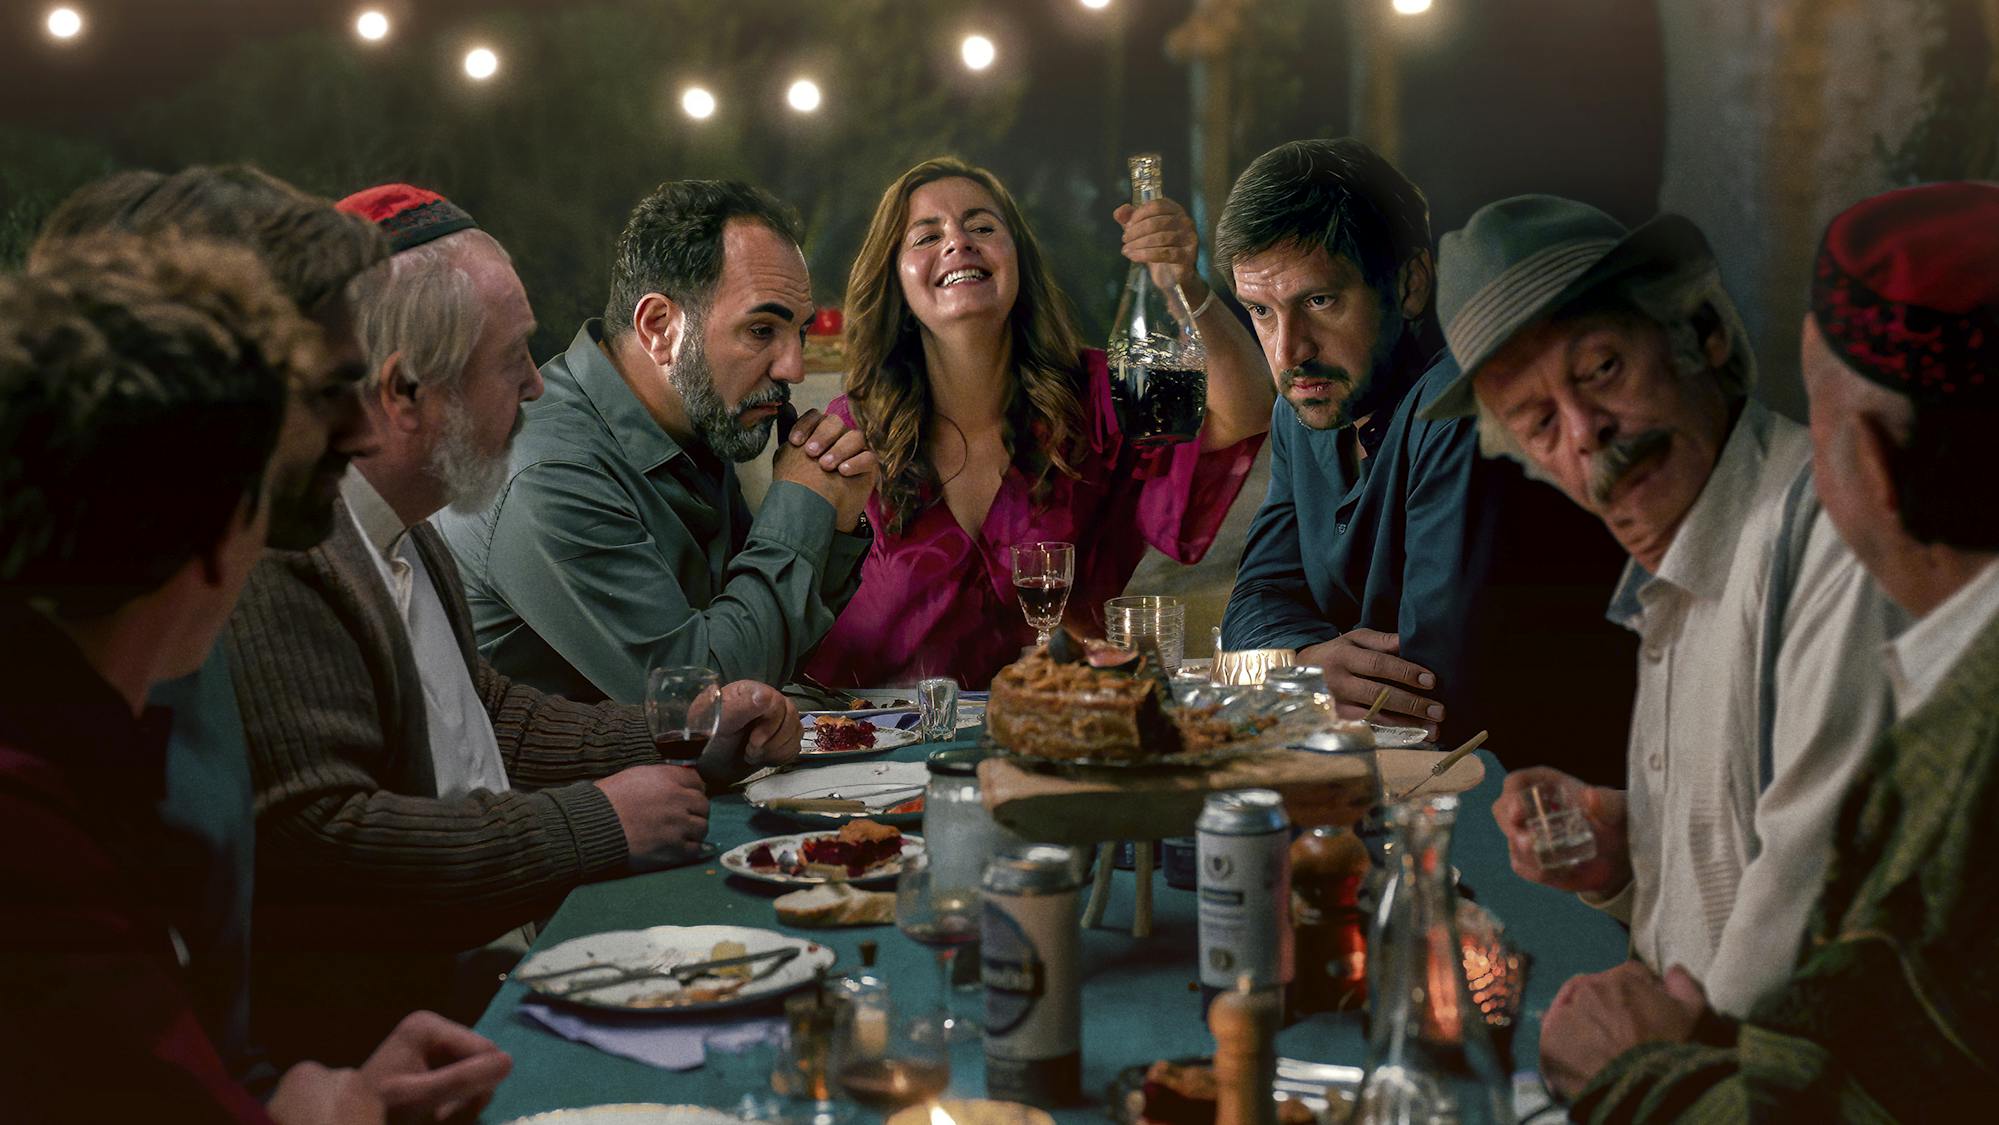 Ilyas Altin (Adnan Maral), Zeynep (Naomi Krauss), Josip (Goran Bogdan) sit together at a very full dinner table, laughing and talking.